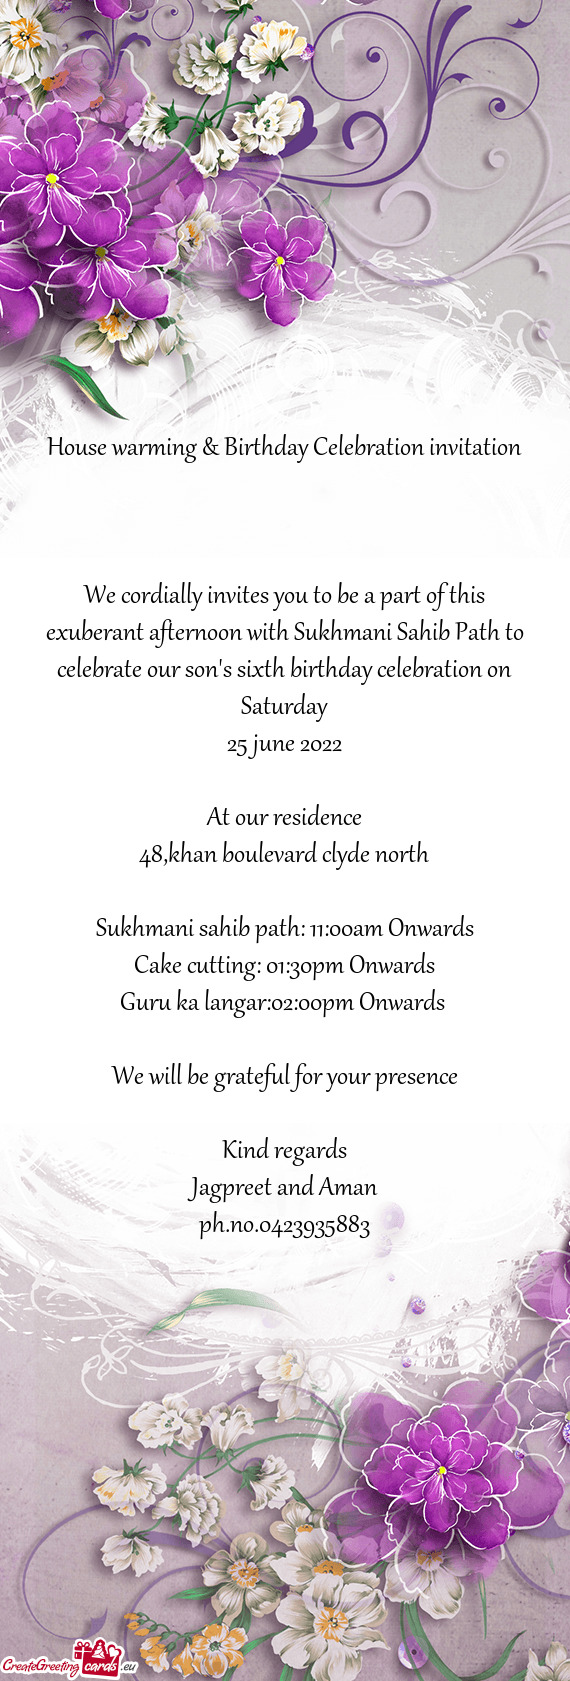 House warming & Birthday Celebration invitation